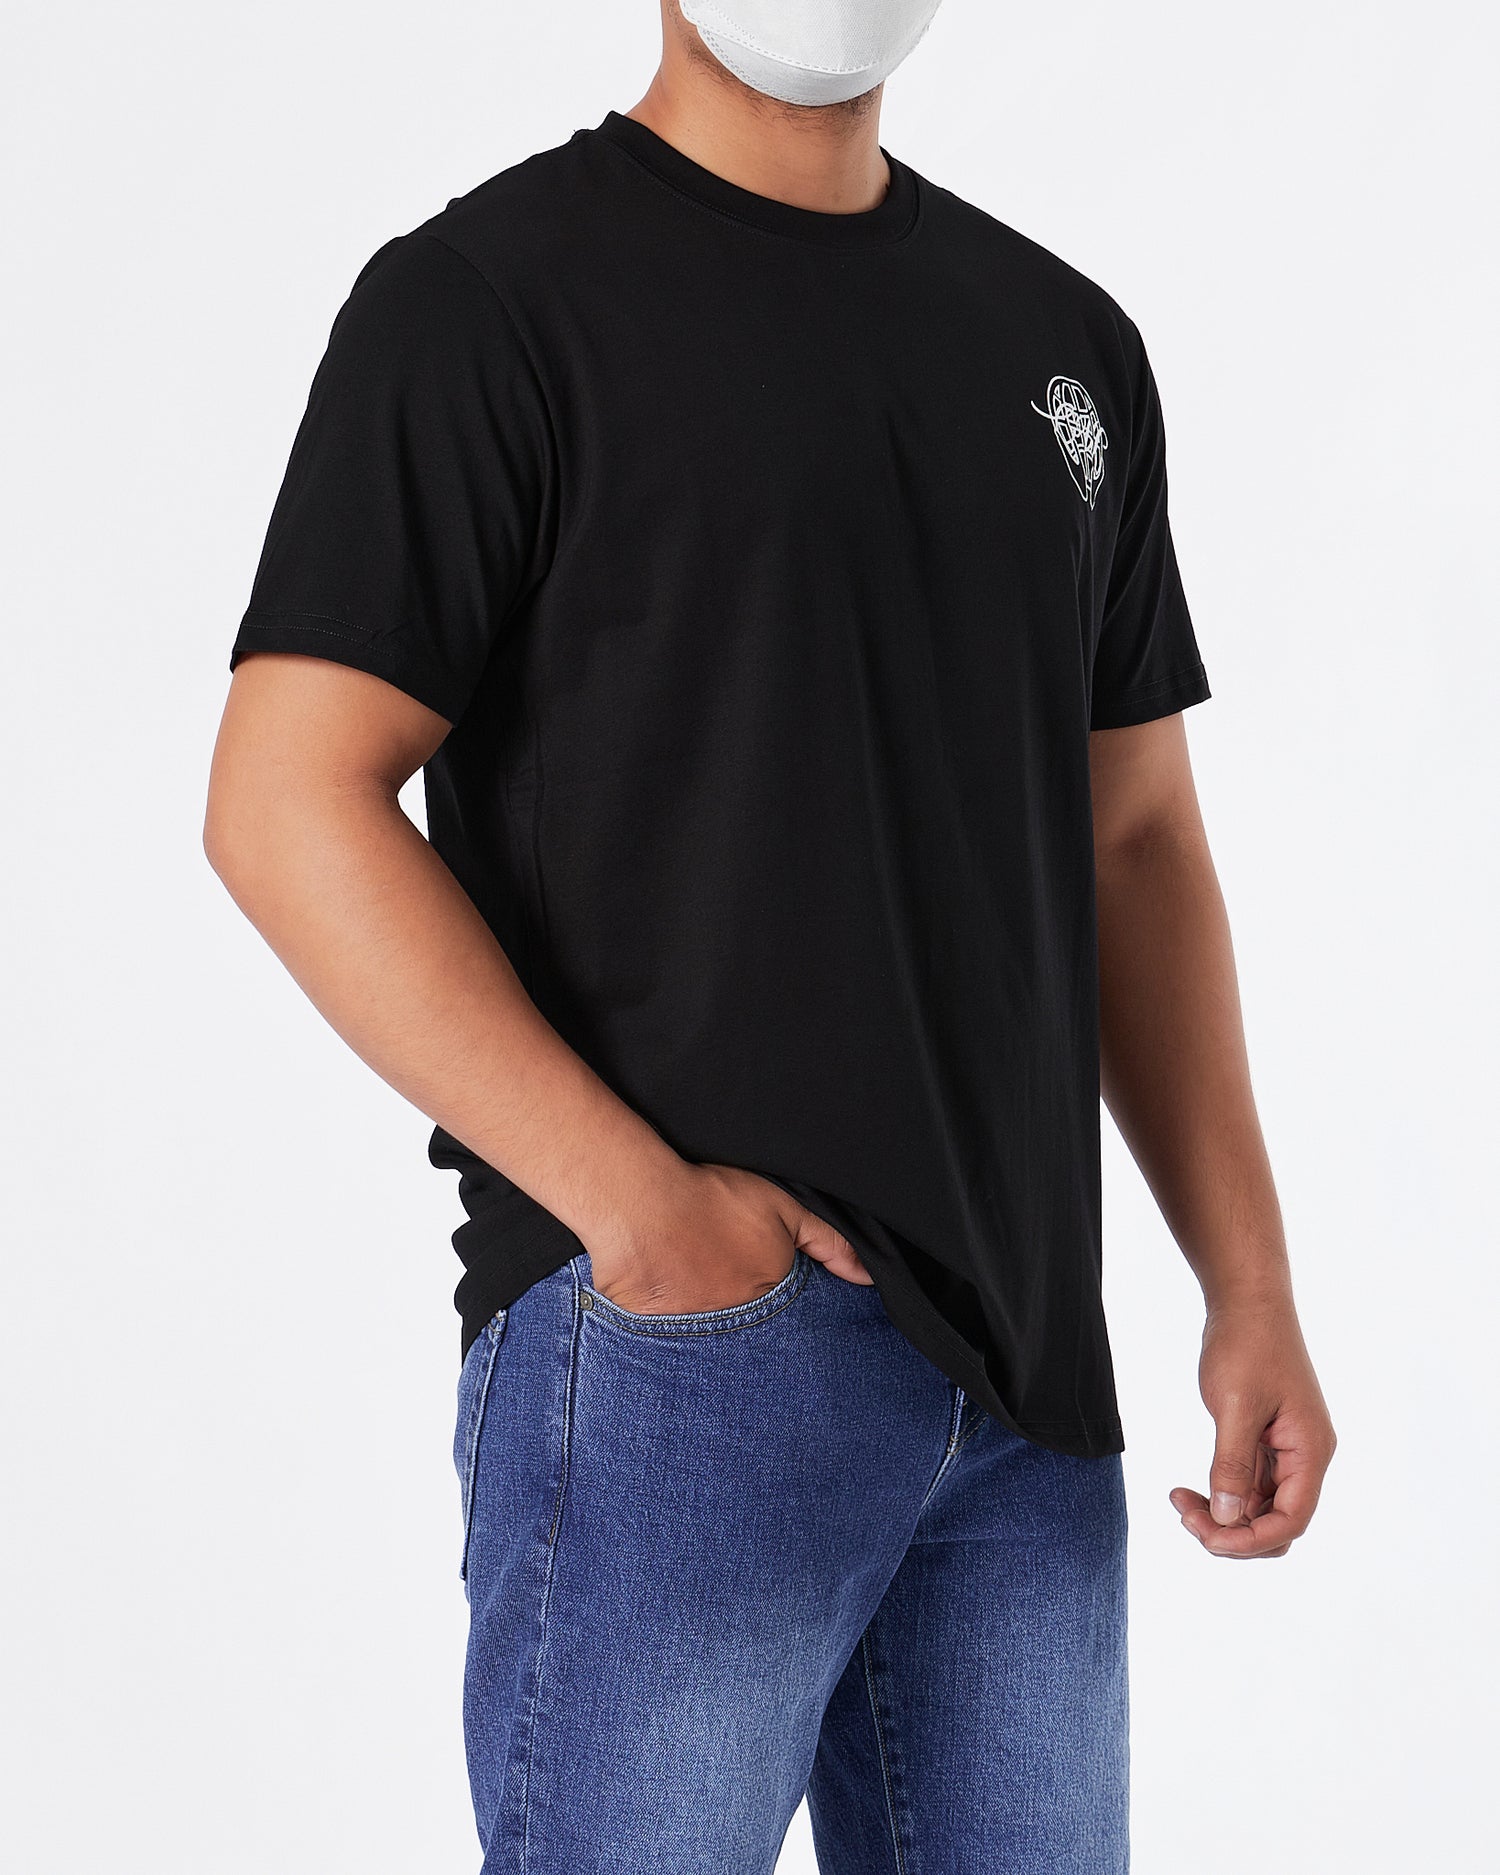 OW Cross Arrow Back Printed Men Black T-Shirt 20.90